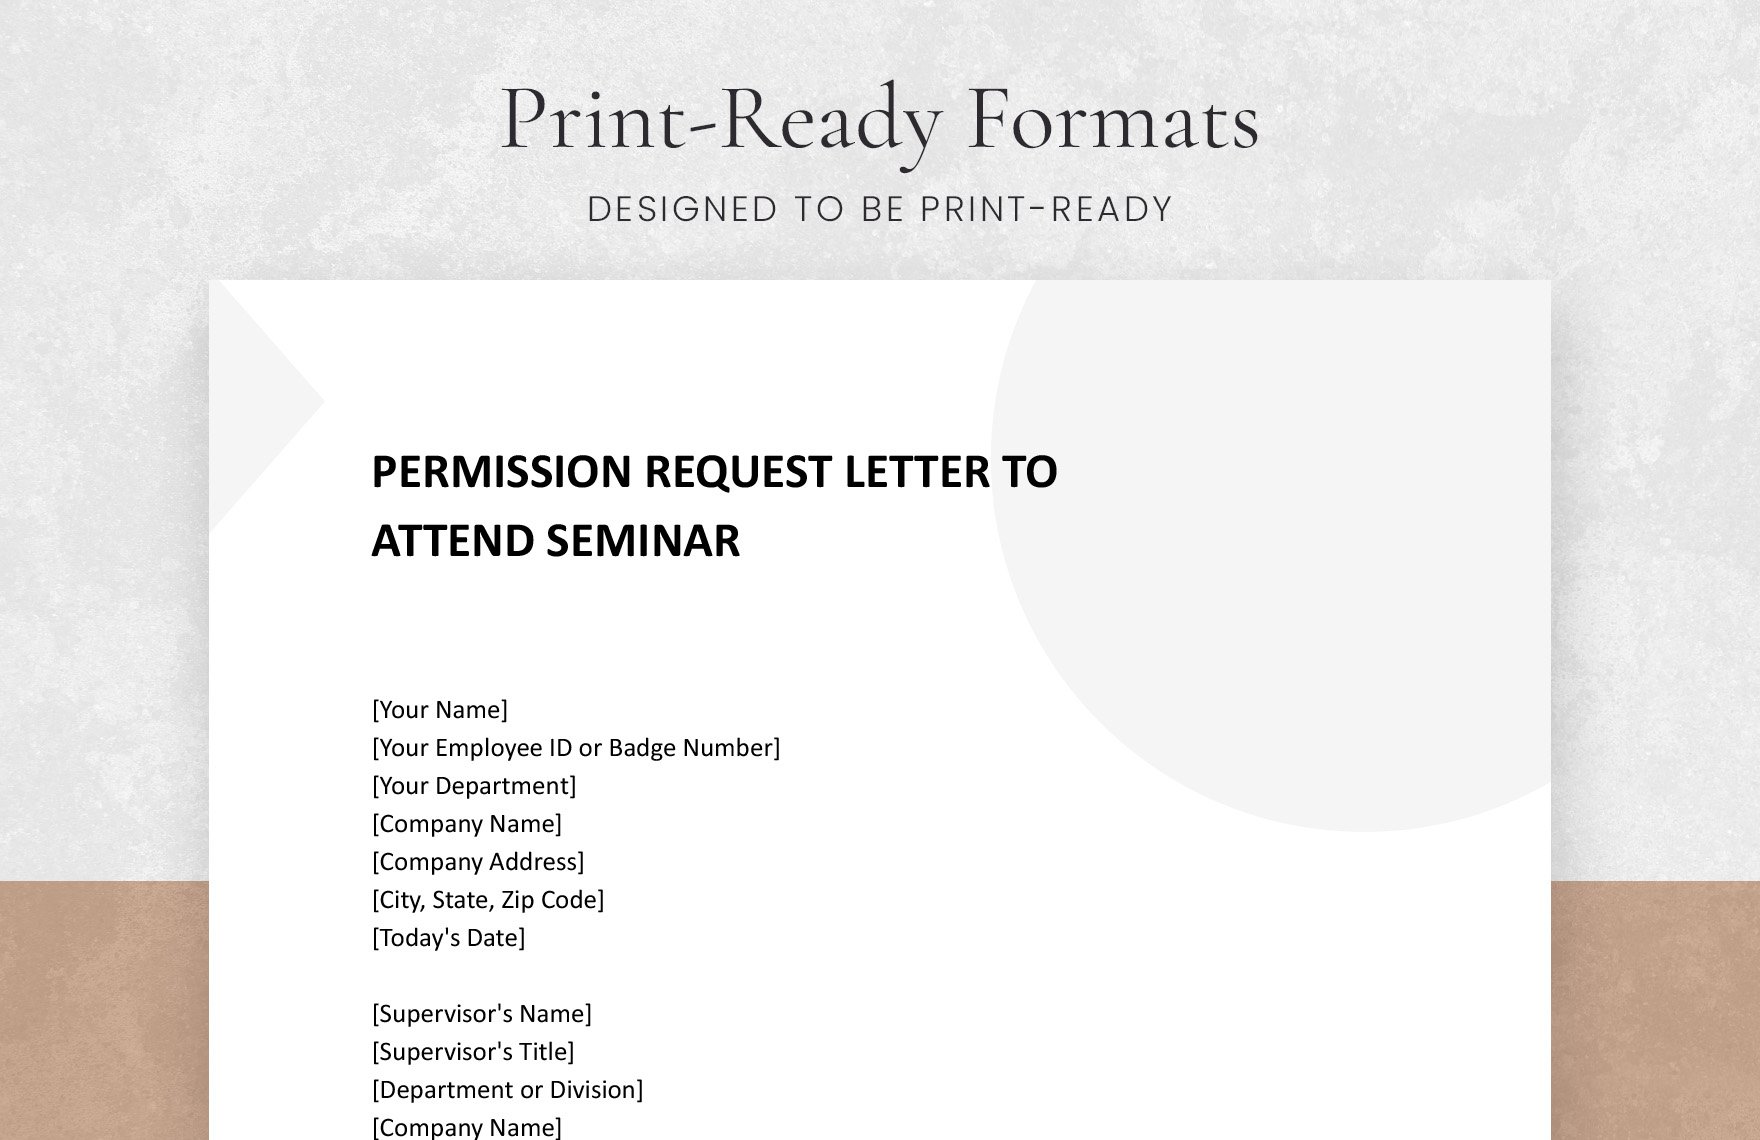 Permission Request Letter To Attend Seminar